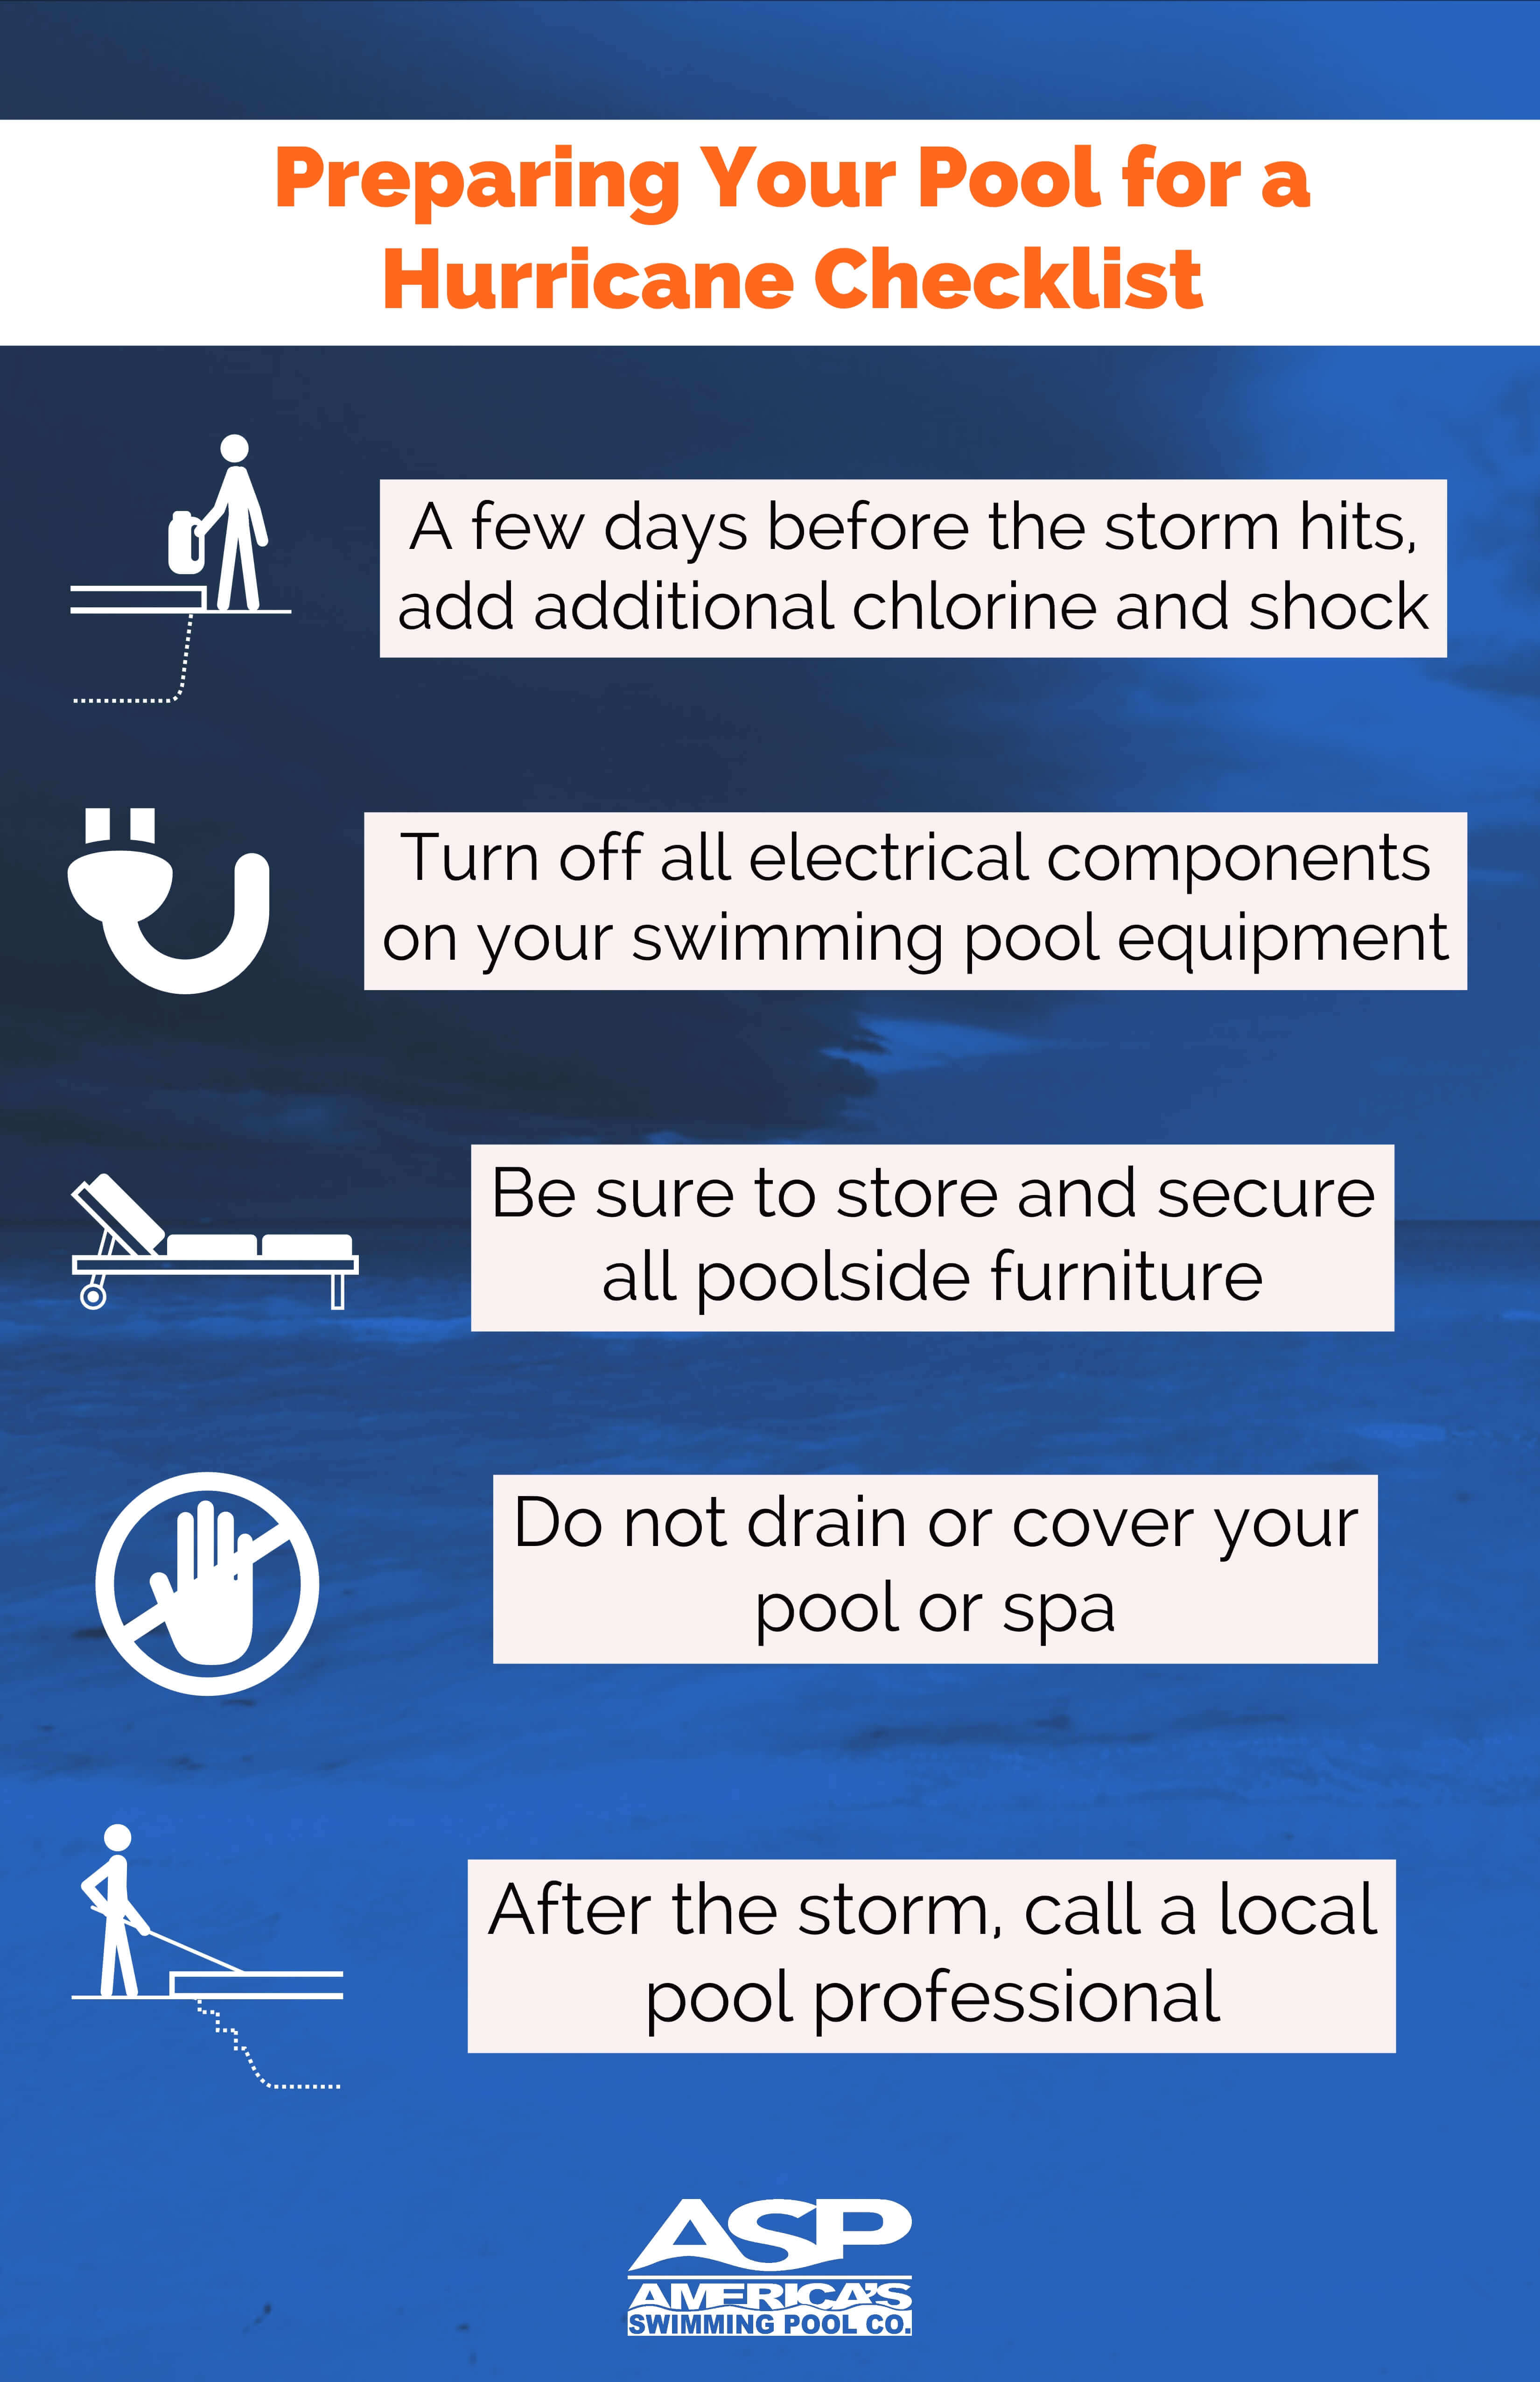 Preparing your pool for a hurricane checklist